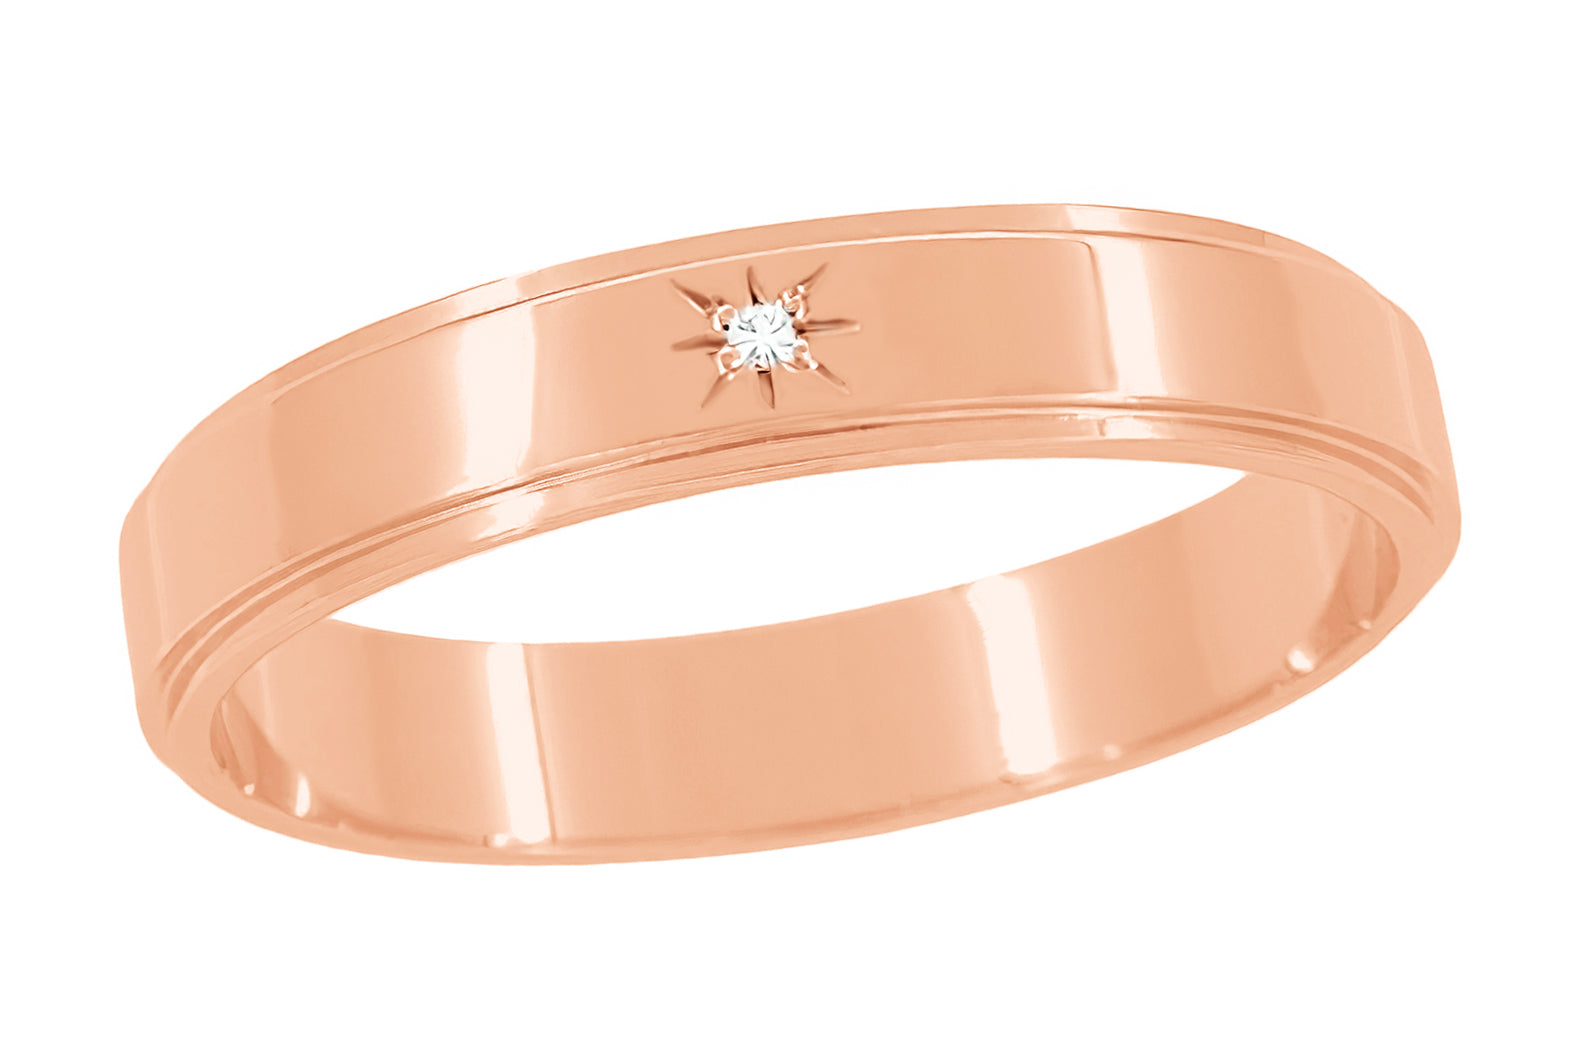 Vintage Diamond Mid Century Wedding Ring Style - 1950's Mid Century Rose Gold Grooved Edge Starburst Diamond Wedding Ring - 4mm Wide